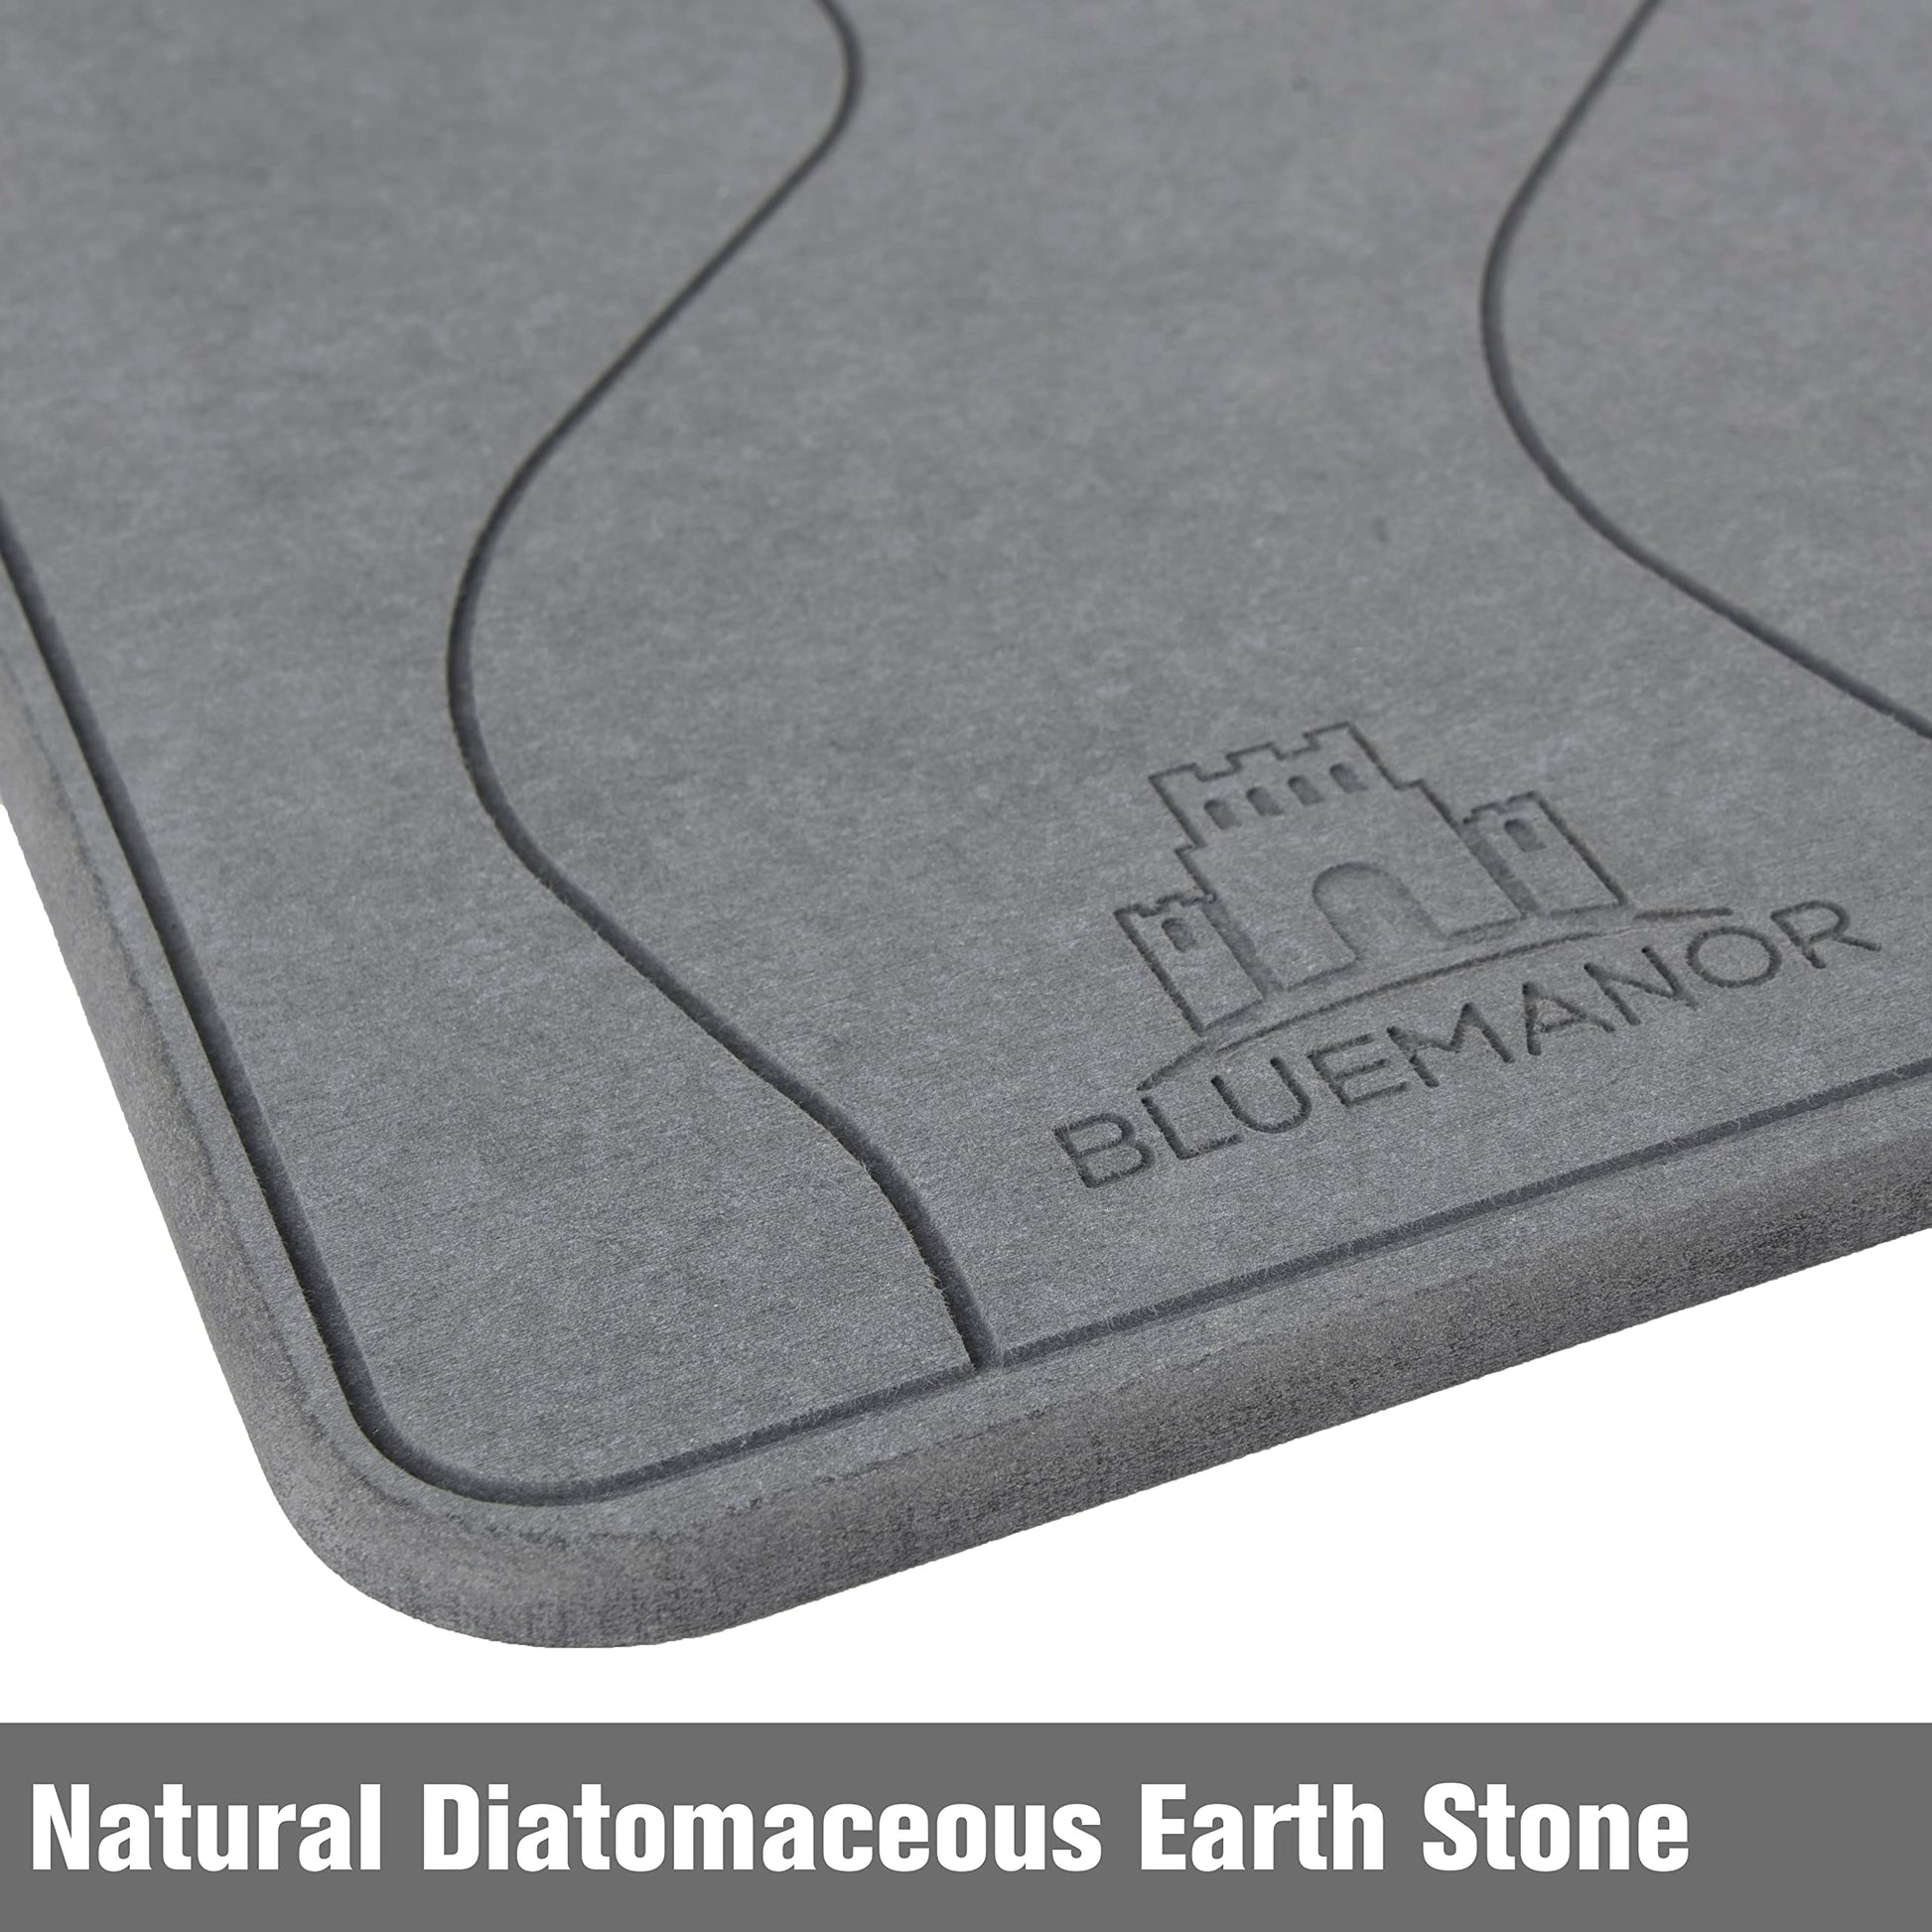 BLUEMANOR Stone Bath Mat, Ultra Absorbent Non-Slip Earth Bath Mat, Qui